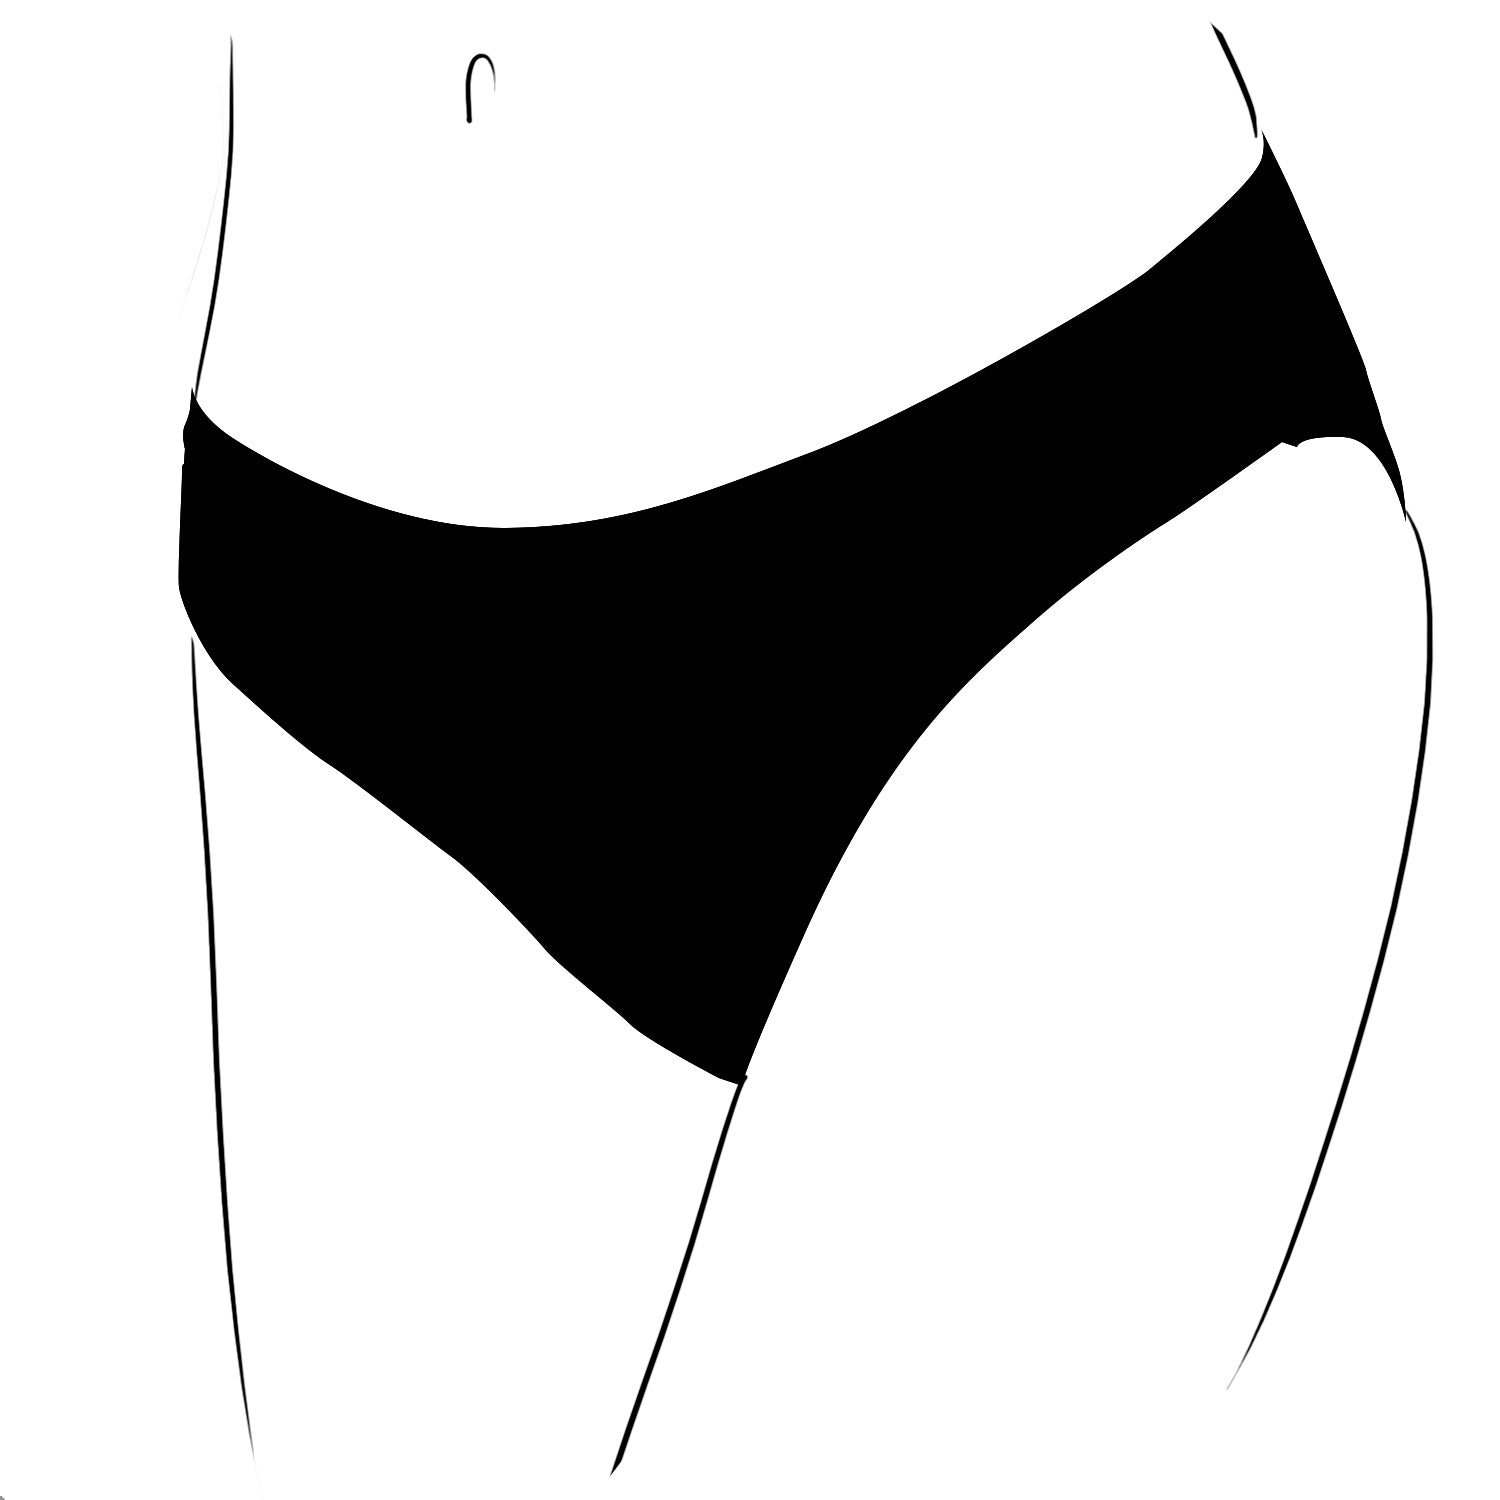 amrita agarwala share sexy white panties tumblr photos